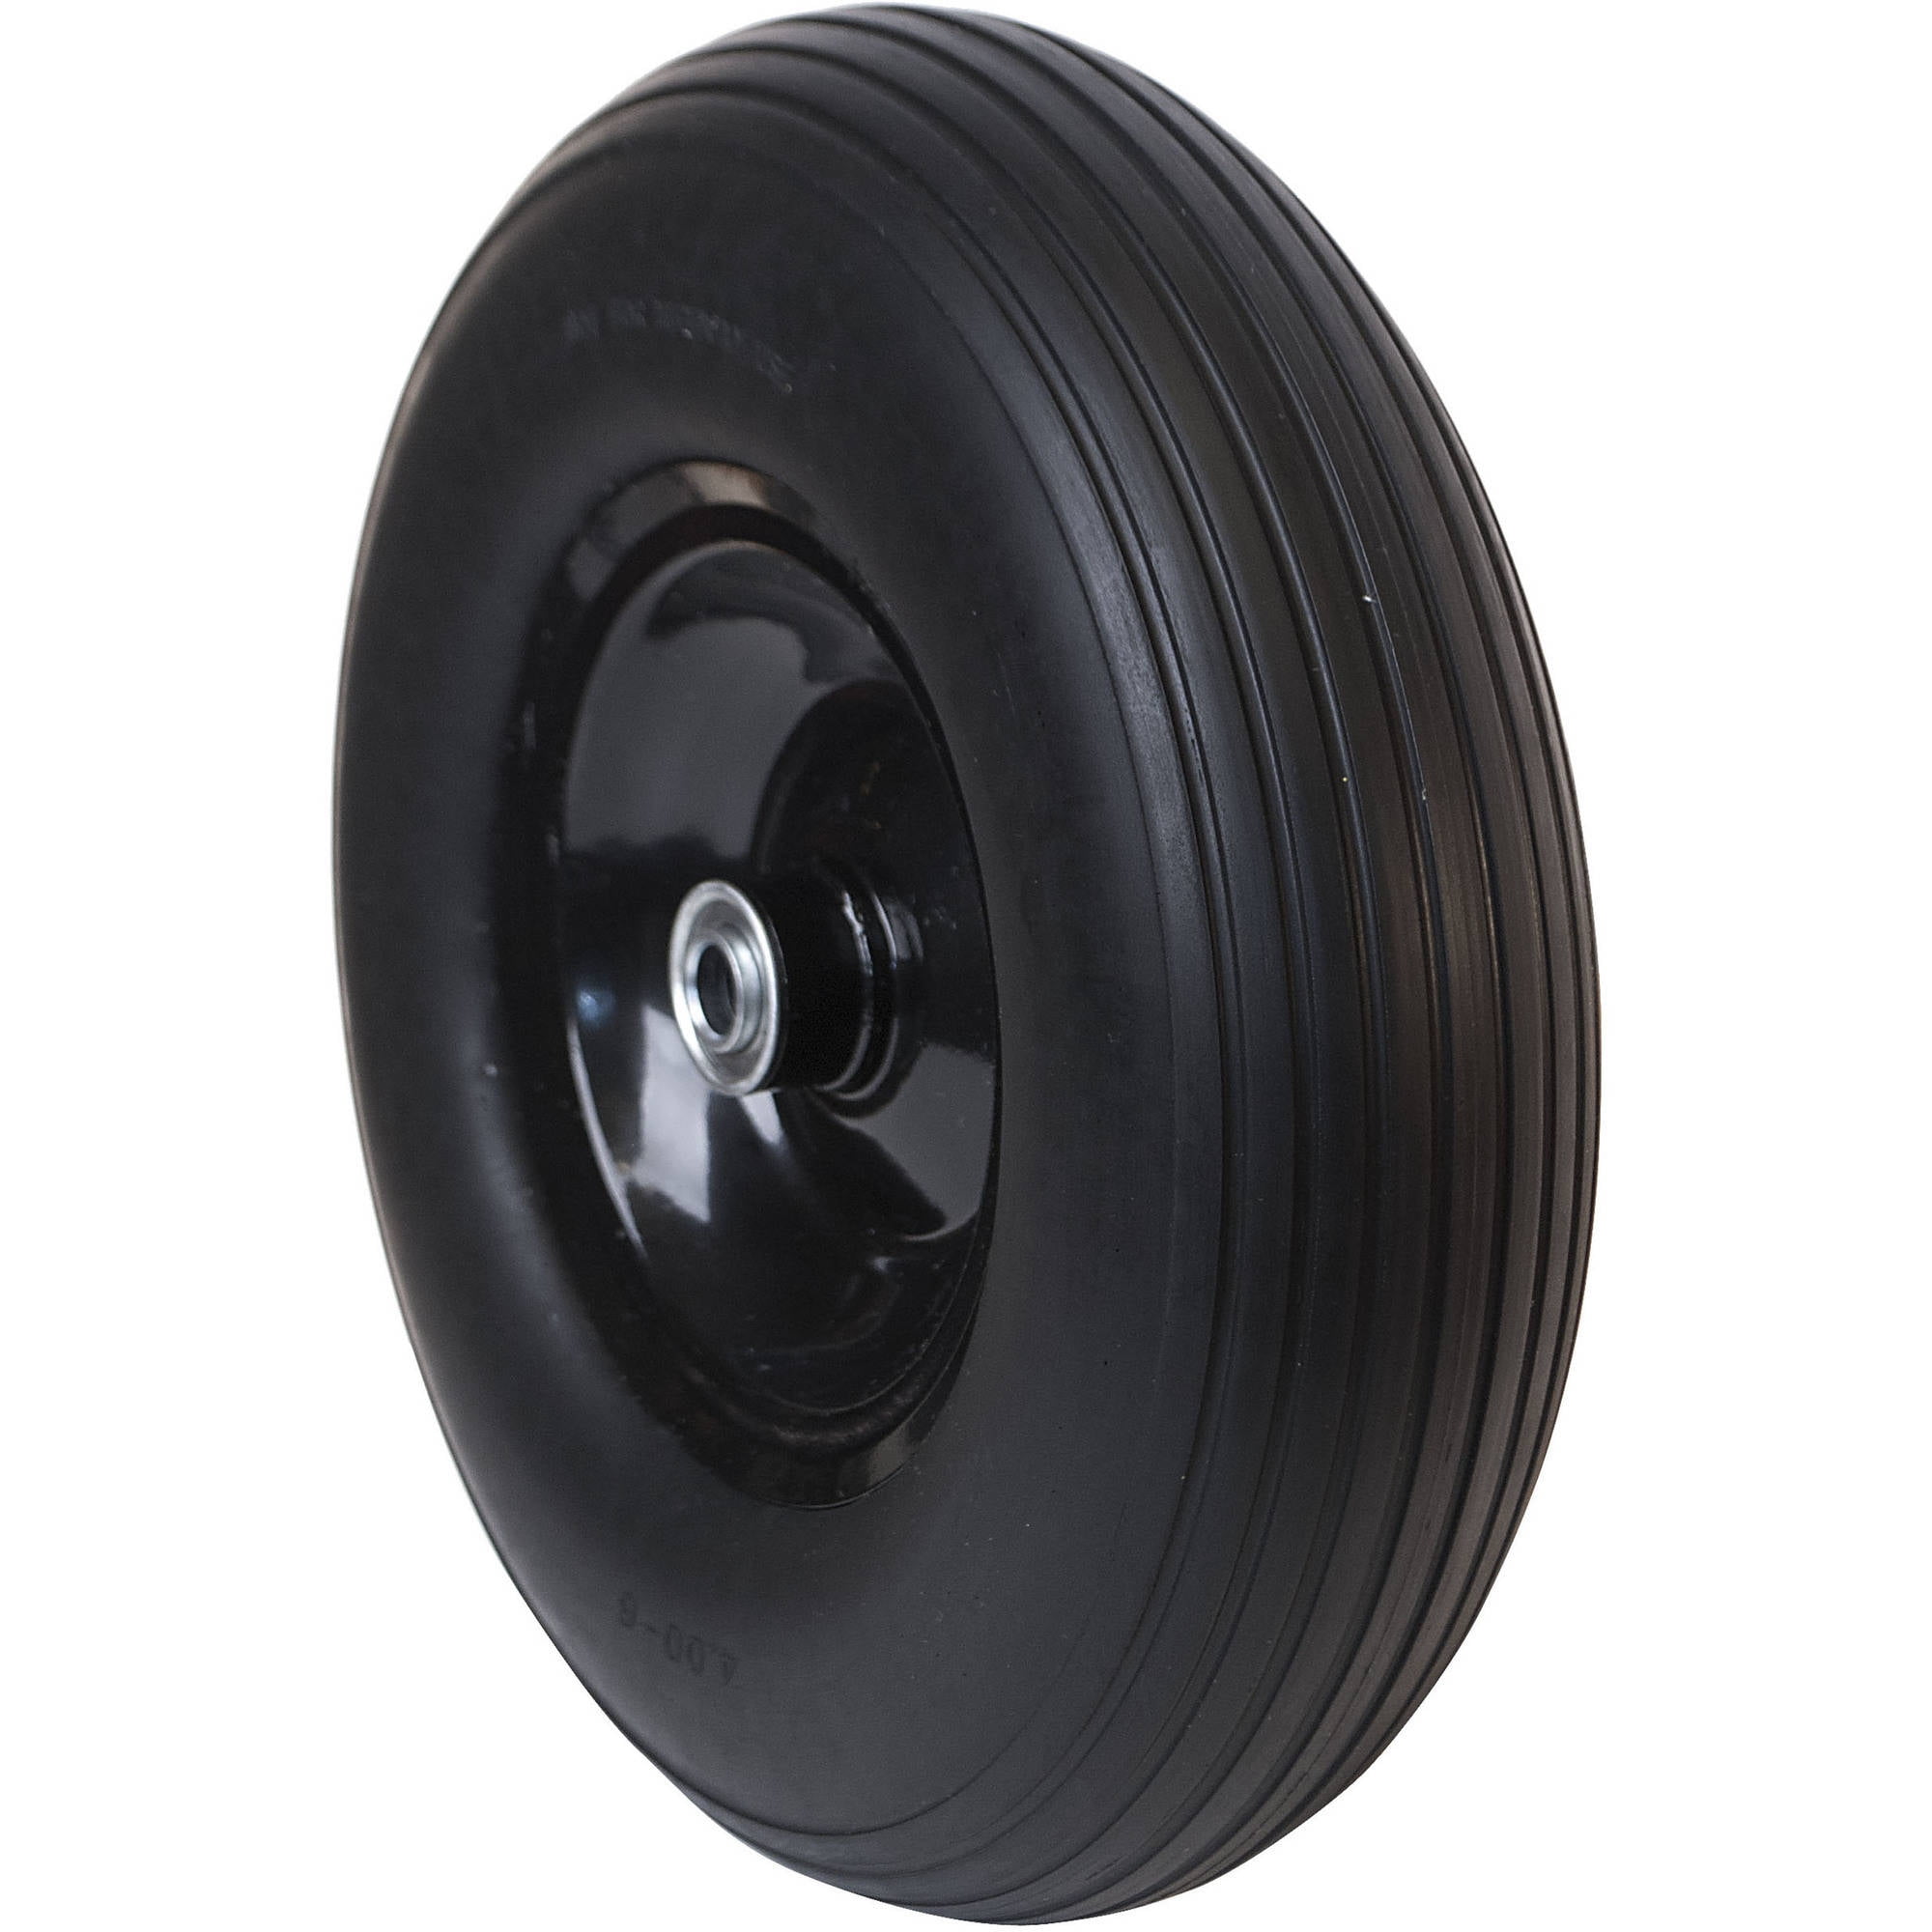 2pc 250mm 9.8" Tyre Non Flat Tubeless Rubber Wheel for Wheelbarrow Sack Truck 